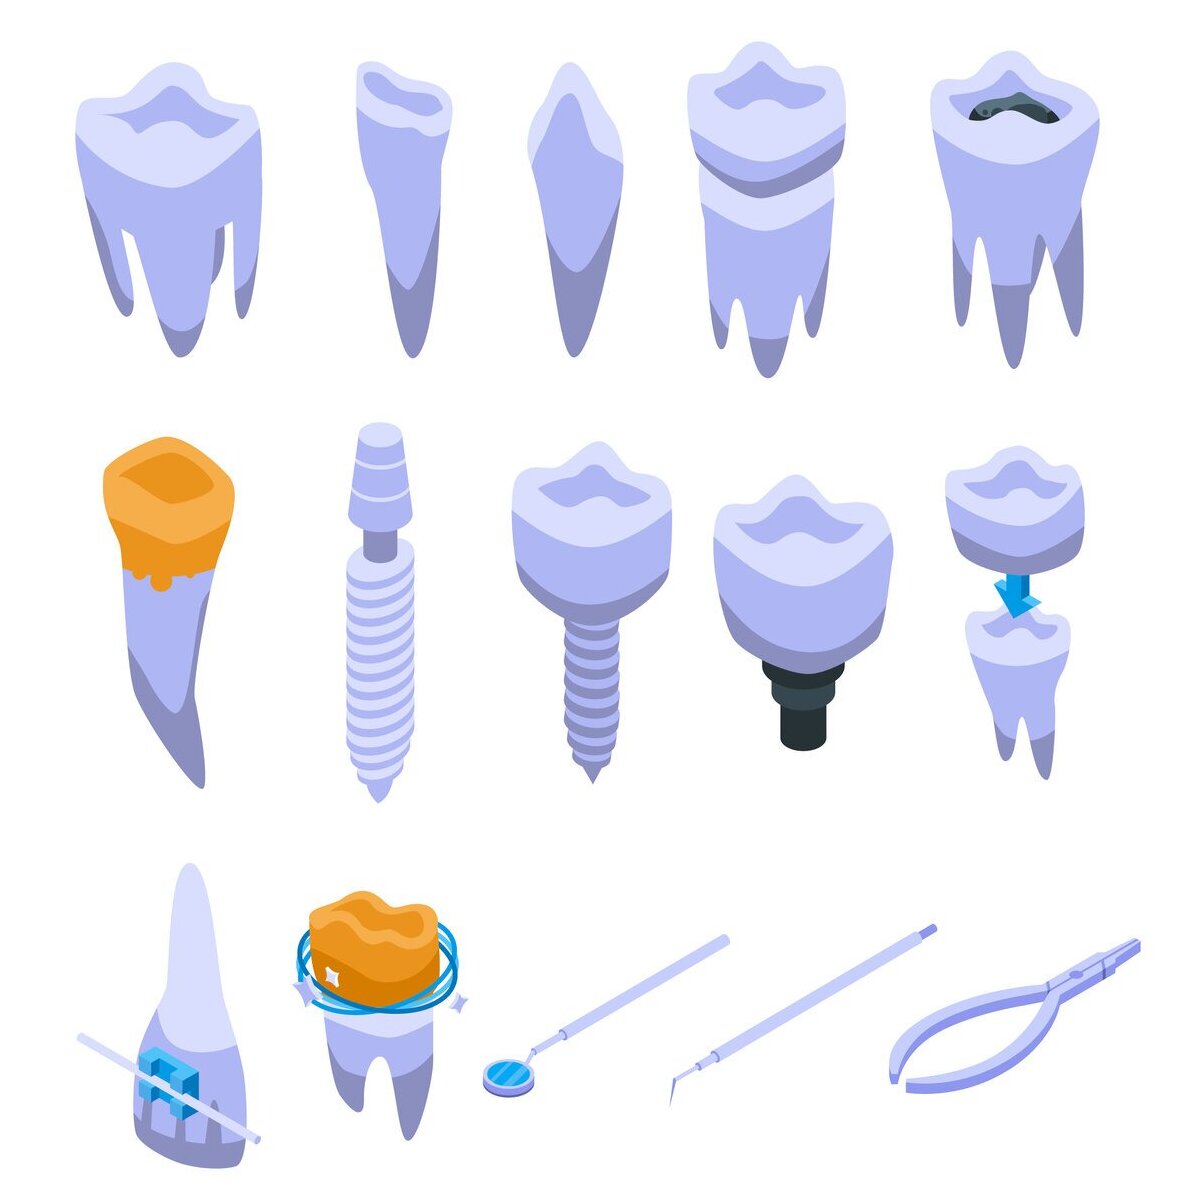 Tooth restoration icons set.